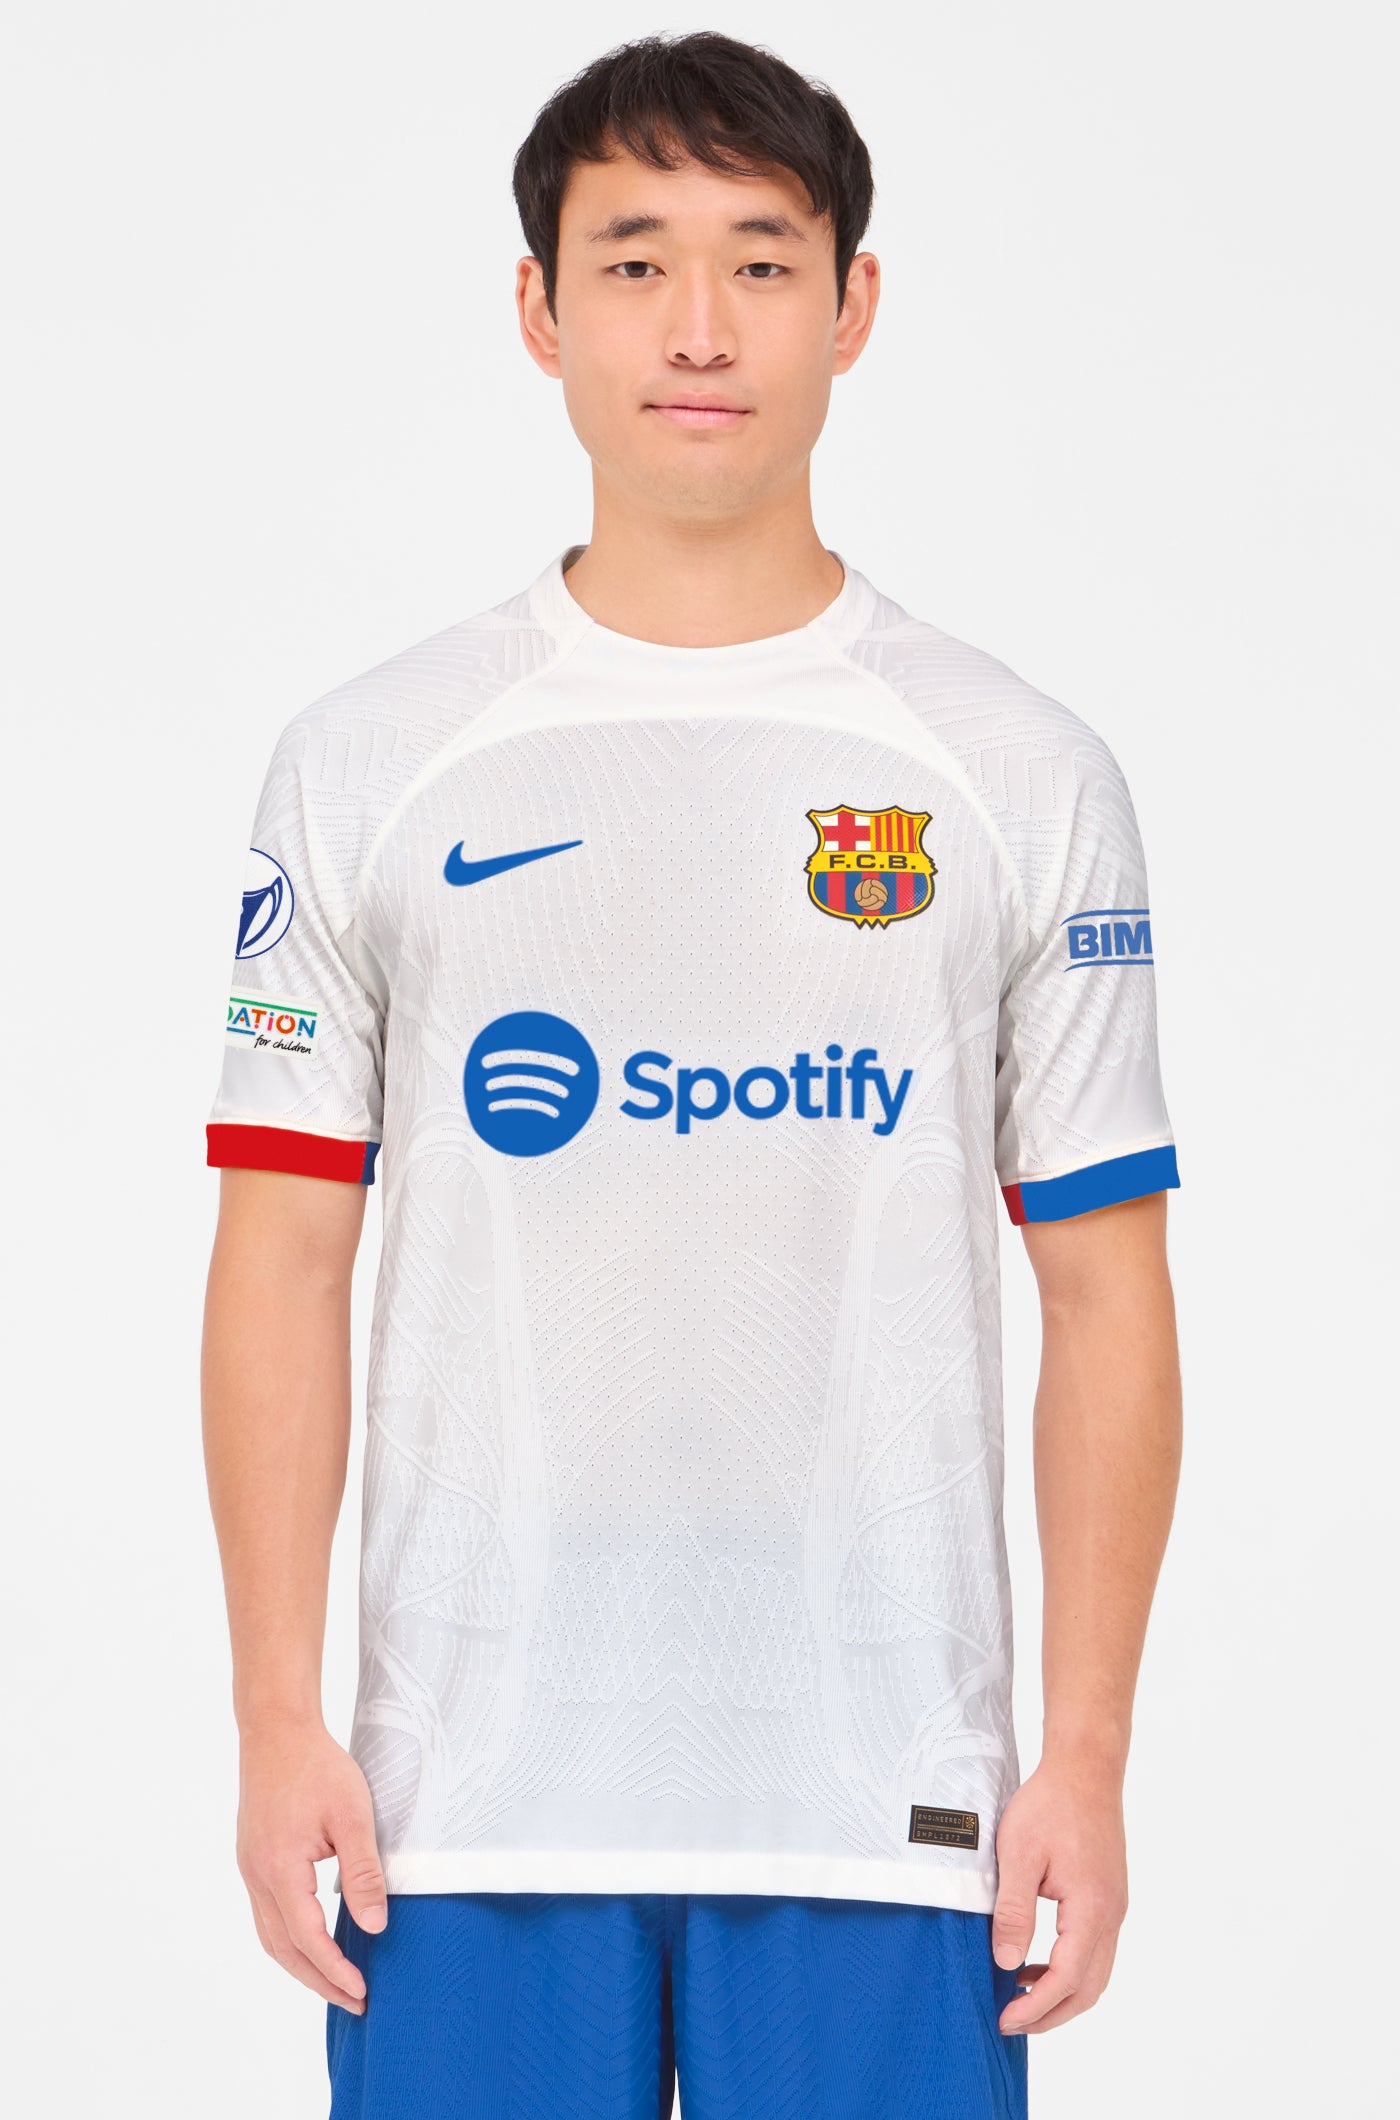 UWCL FC Barcelona away shirt 23/24 Player's Edition - AITANA